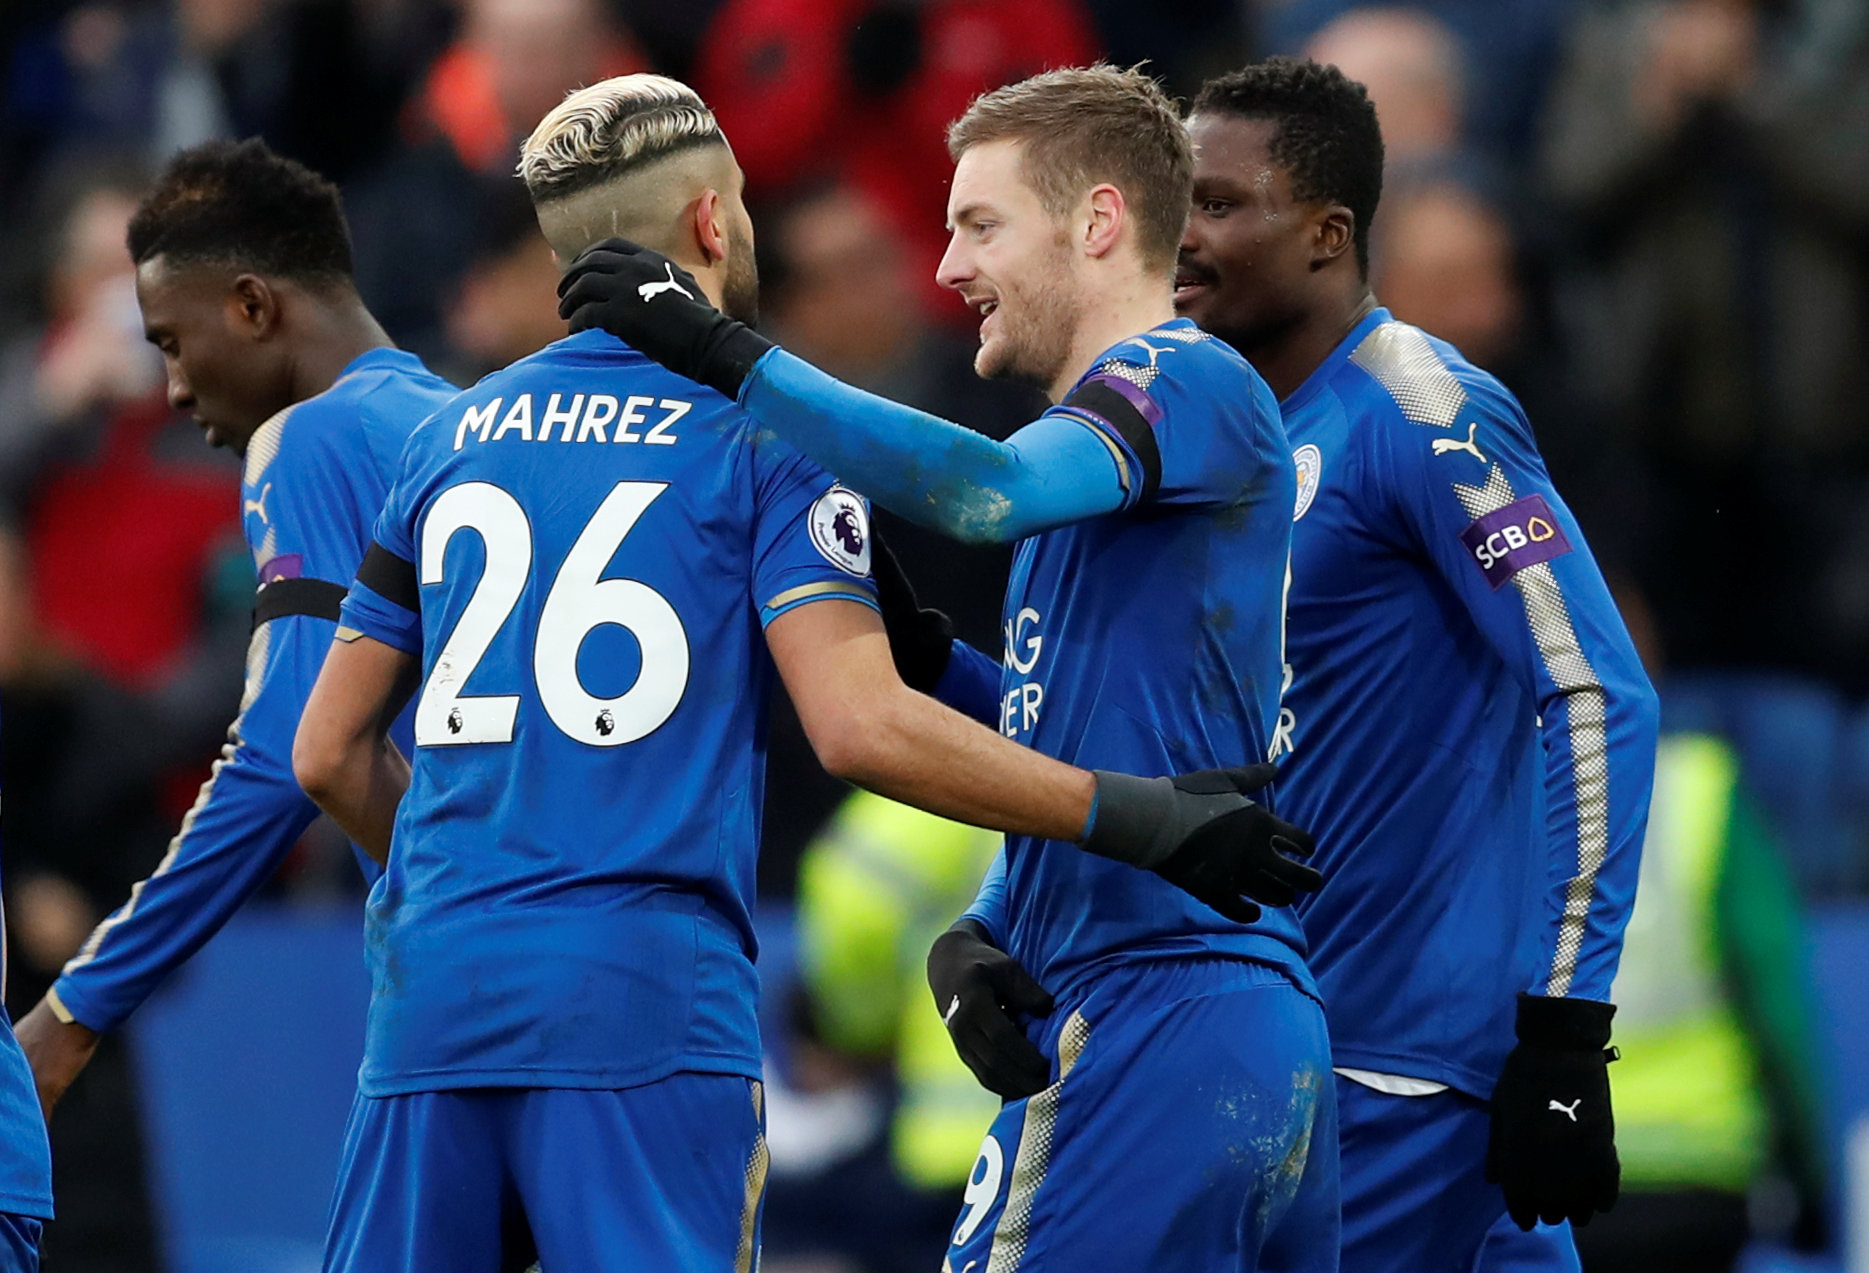 Football: Vardy, Mahrez help Leicester beat Watford